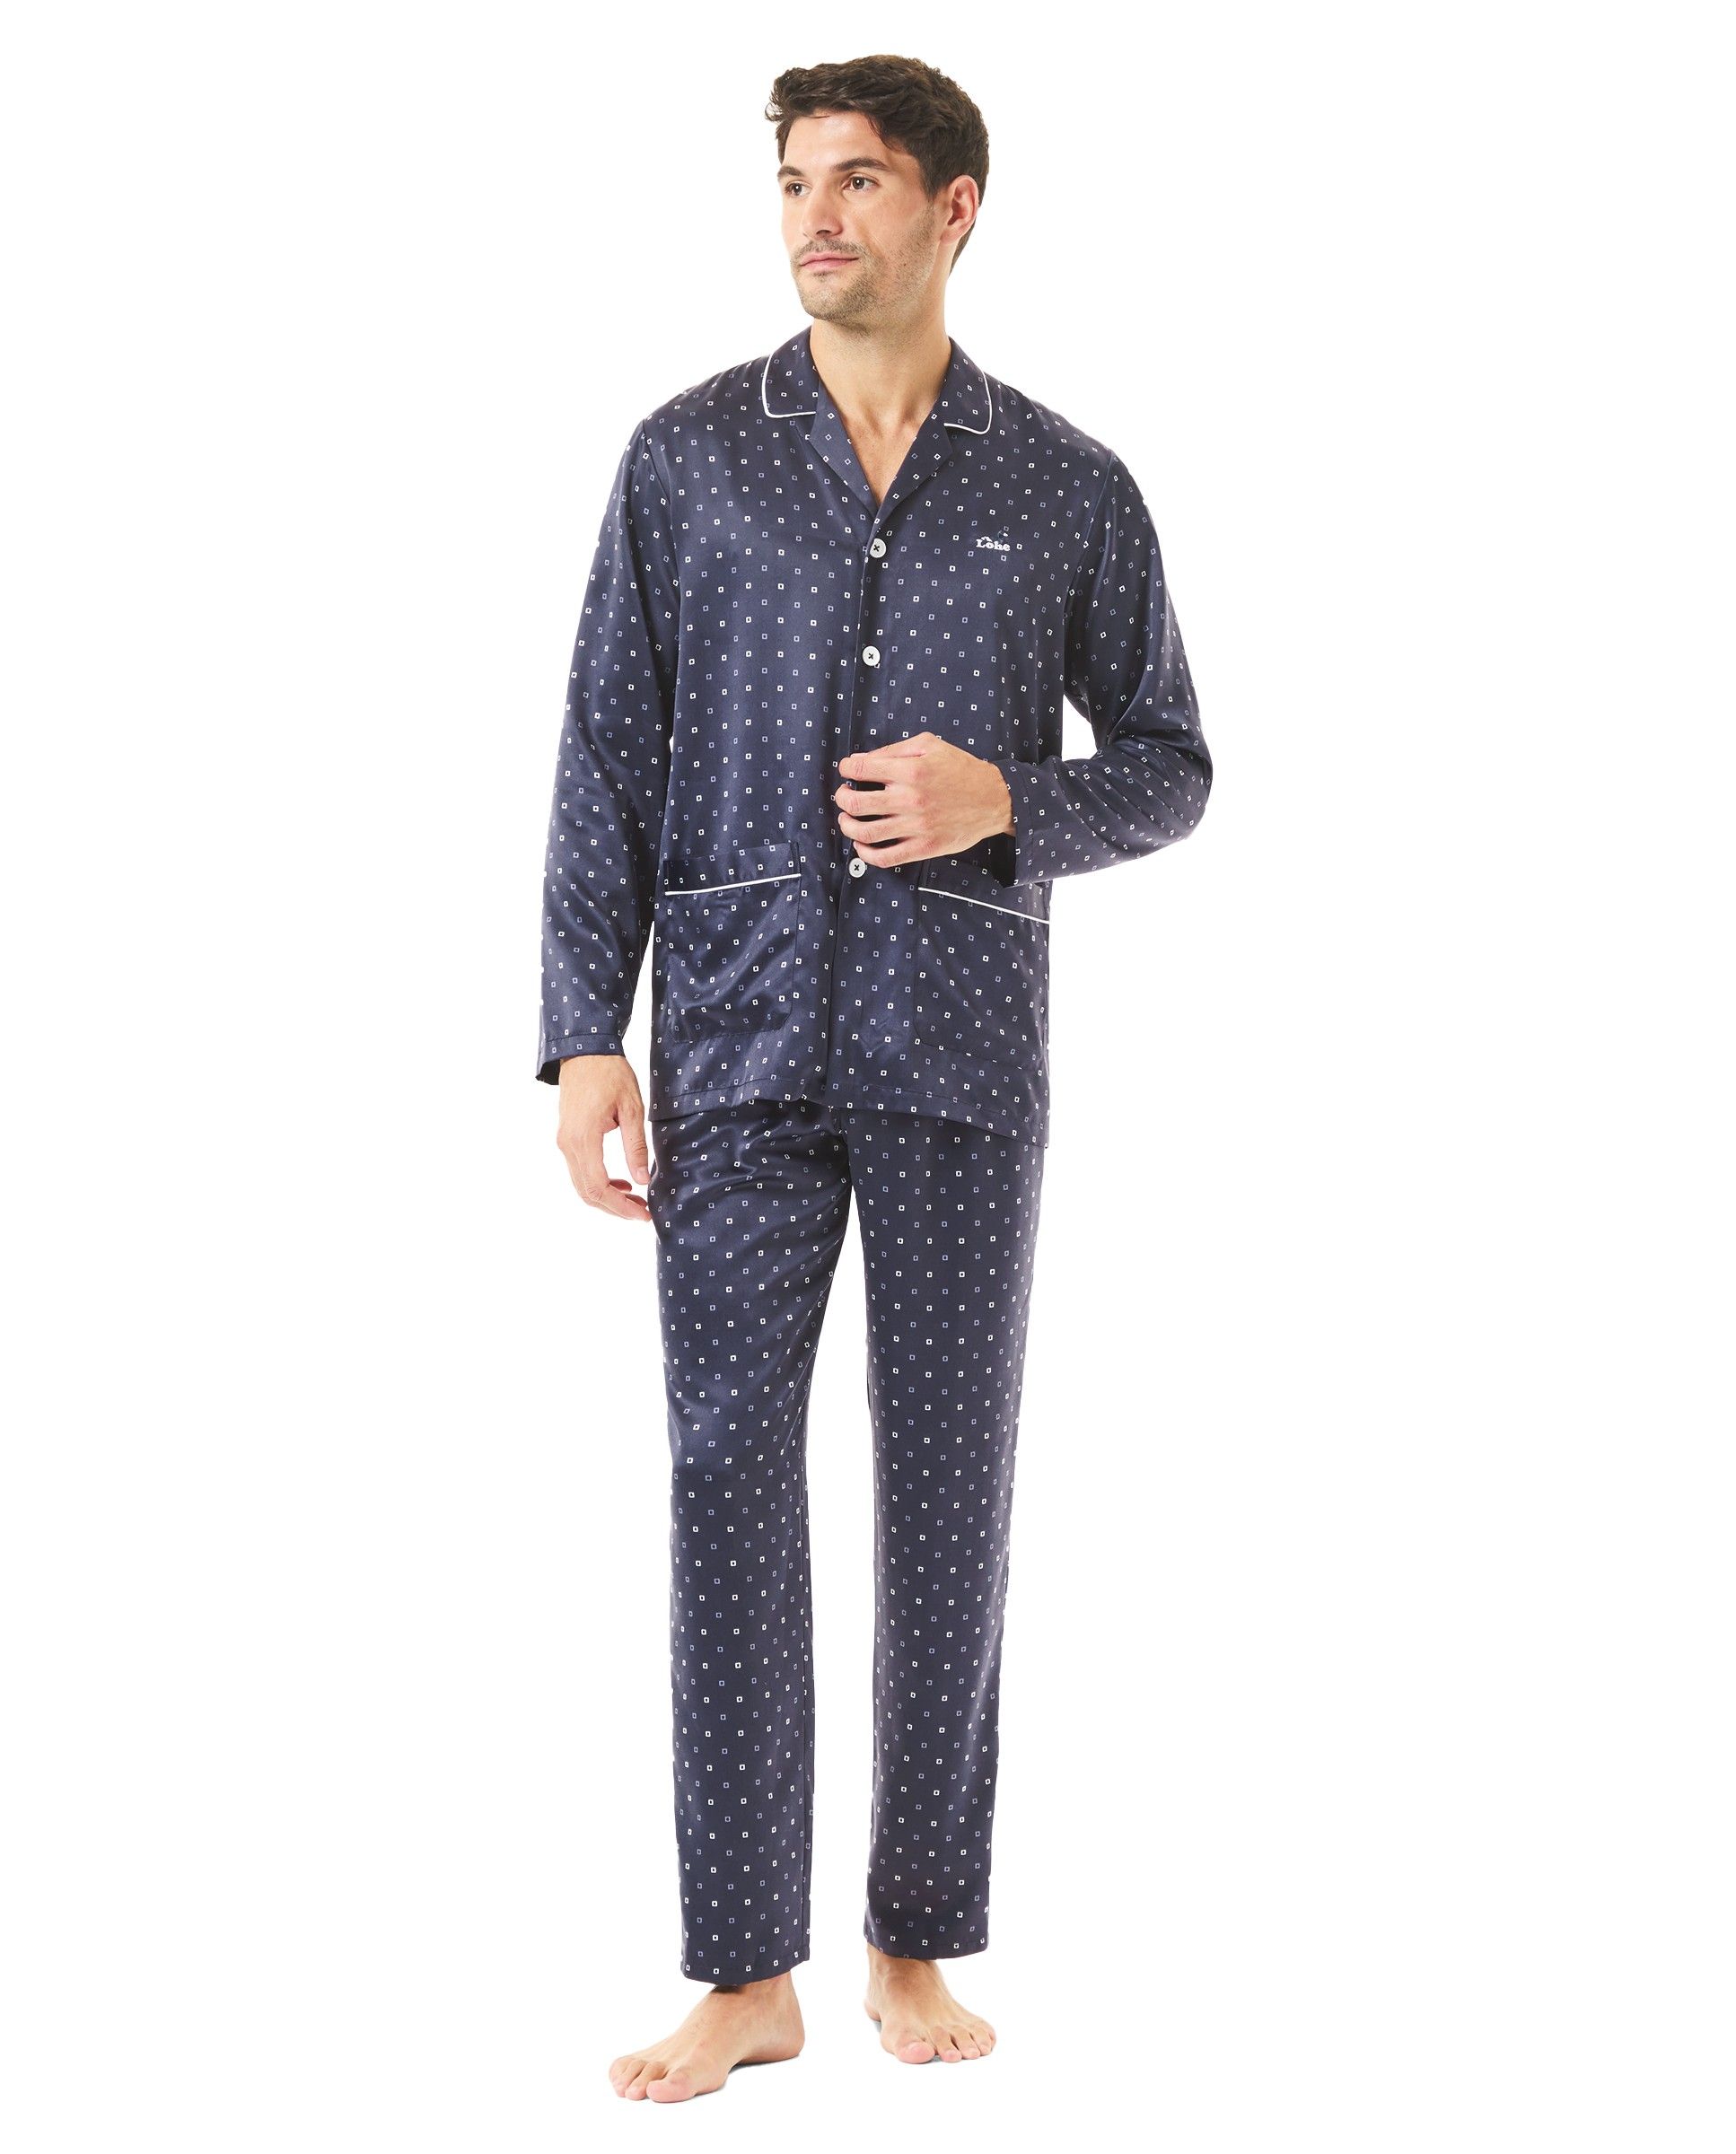 Man in blue satin Christmas pyjamas with open pockets and polka dot print